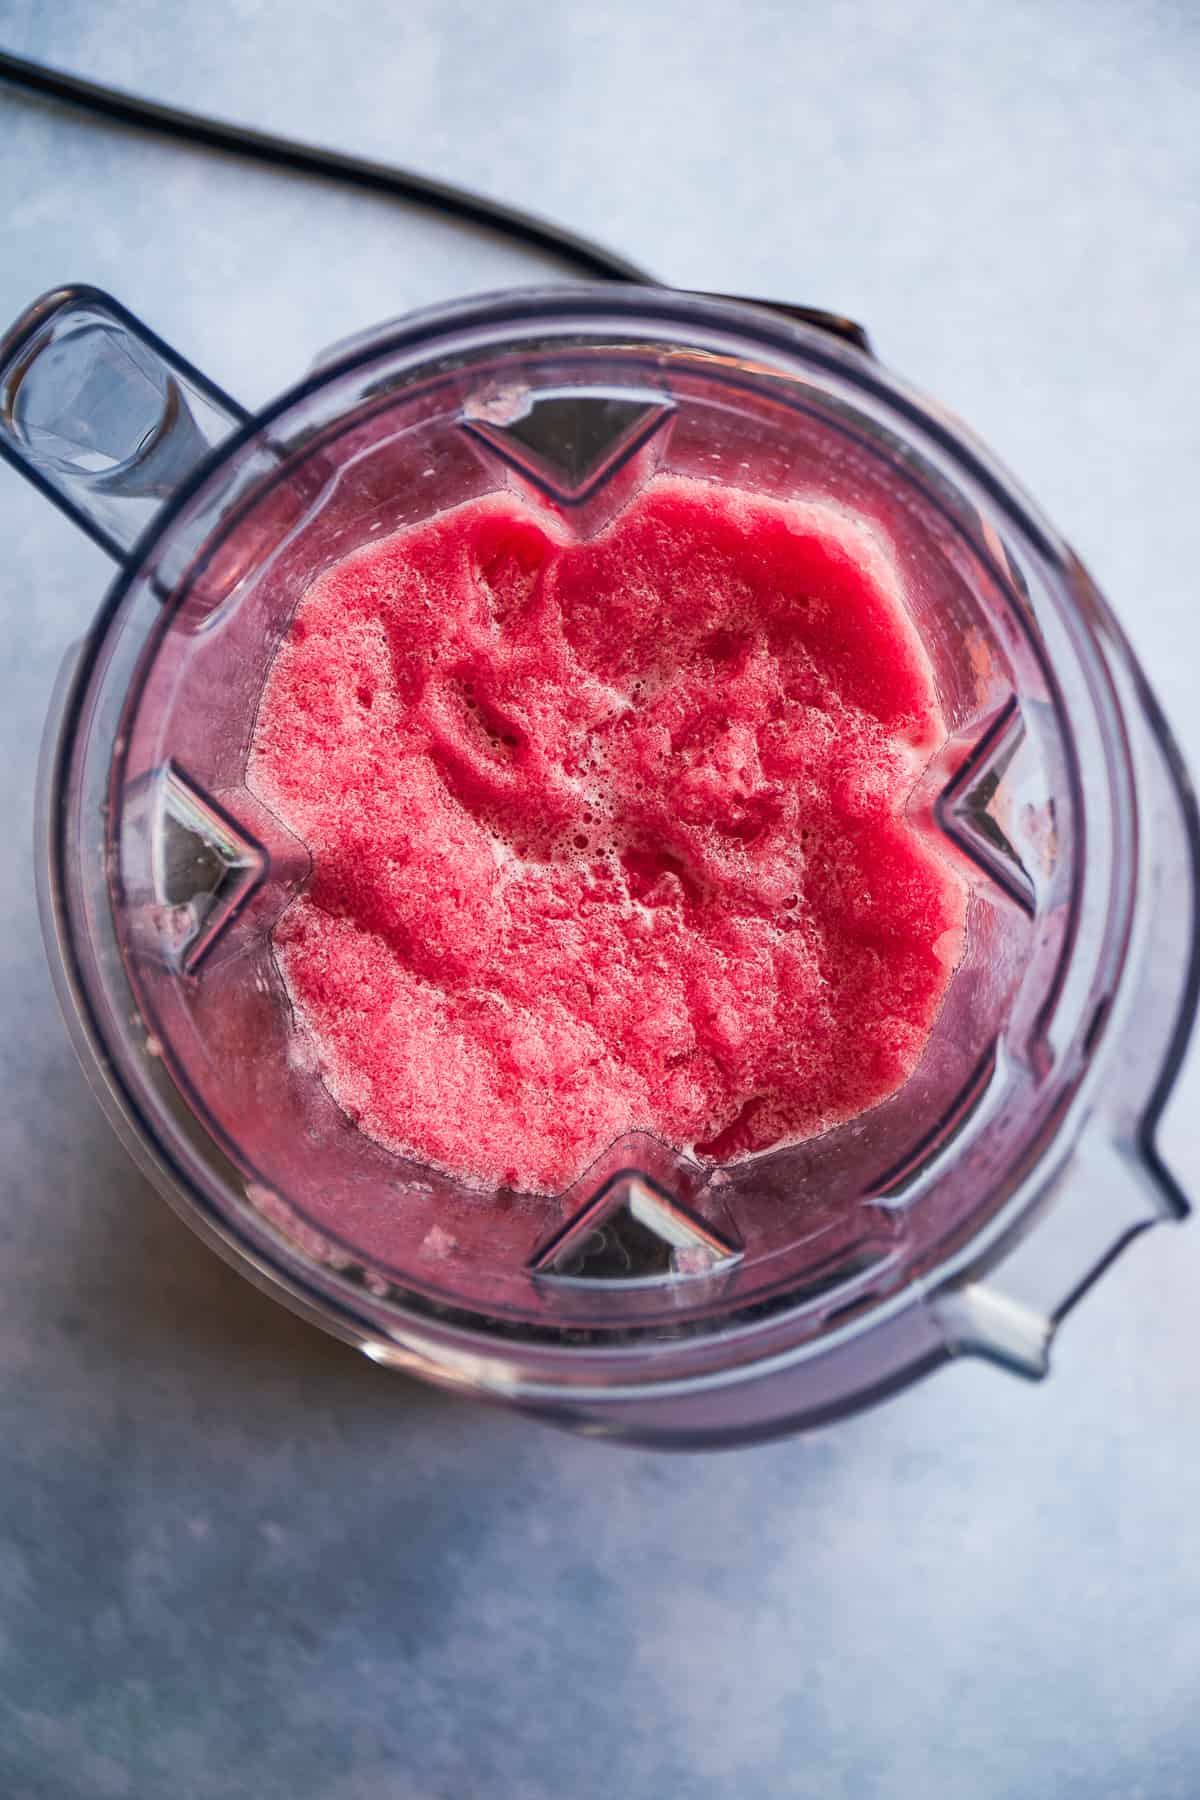 Frozen pomegranate mocktail margarita blended in a blender.